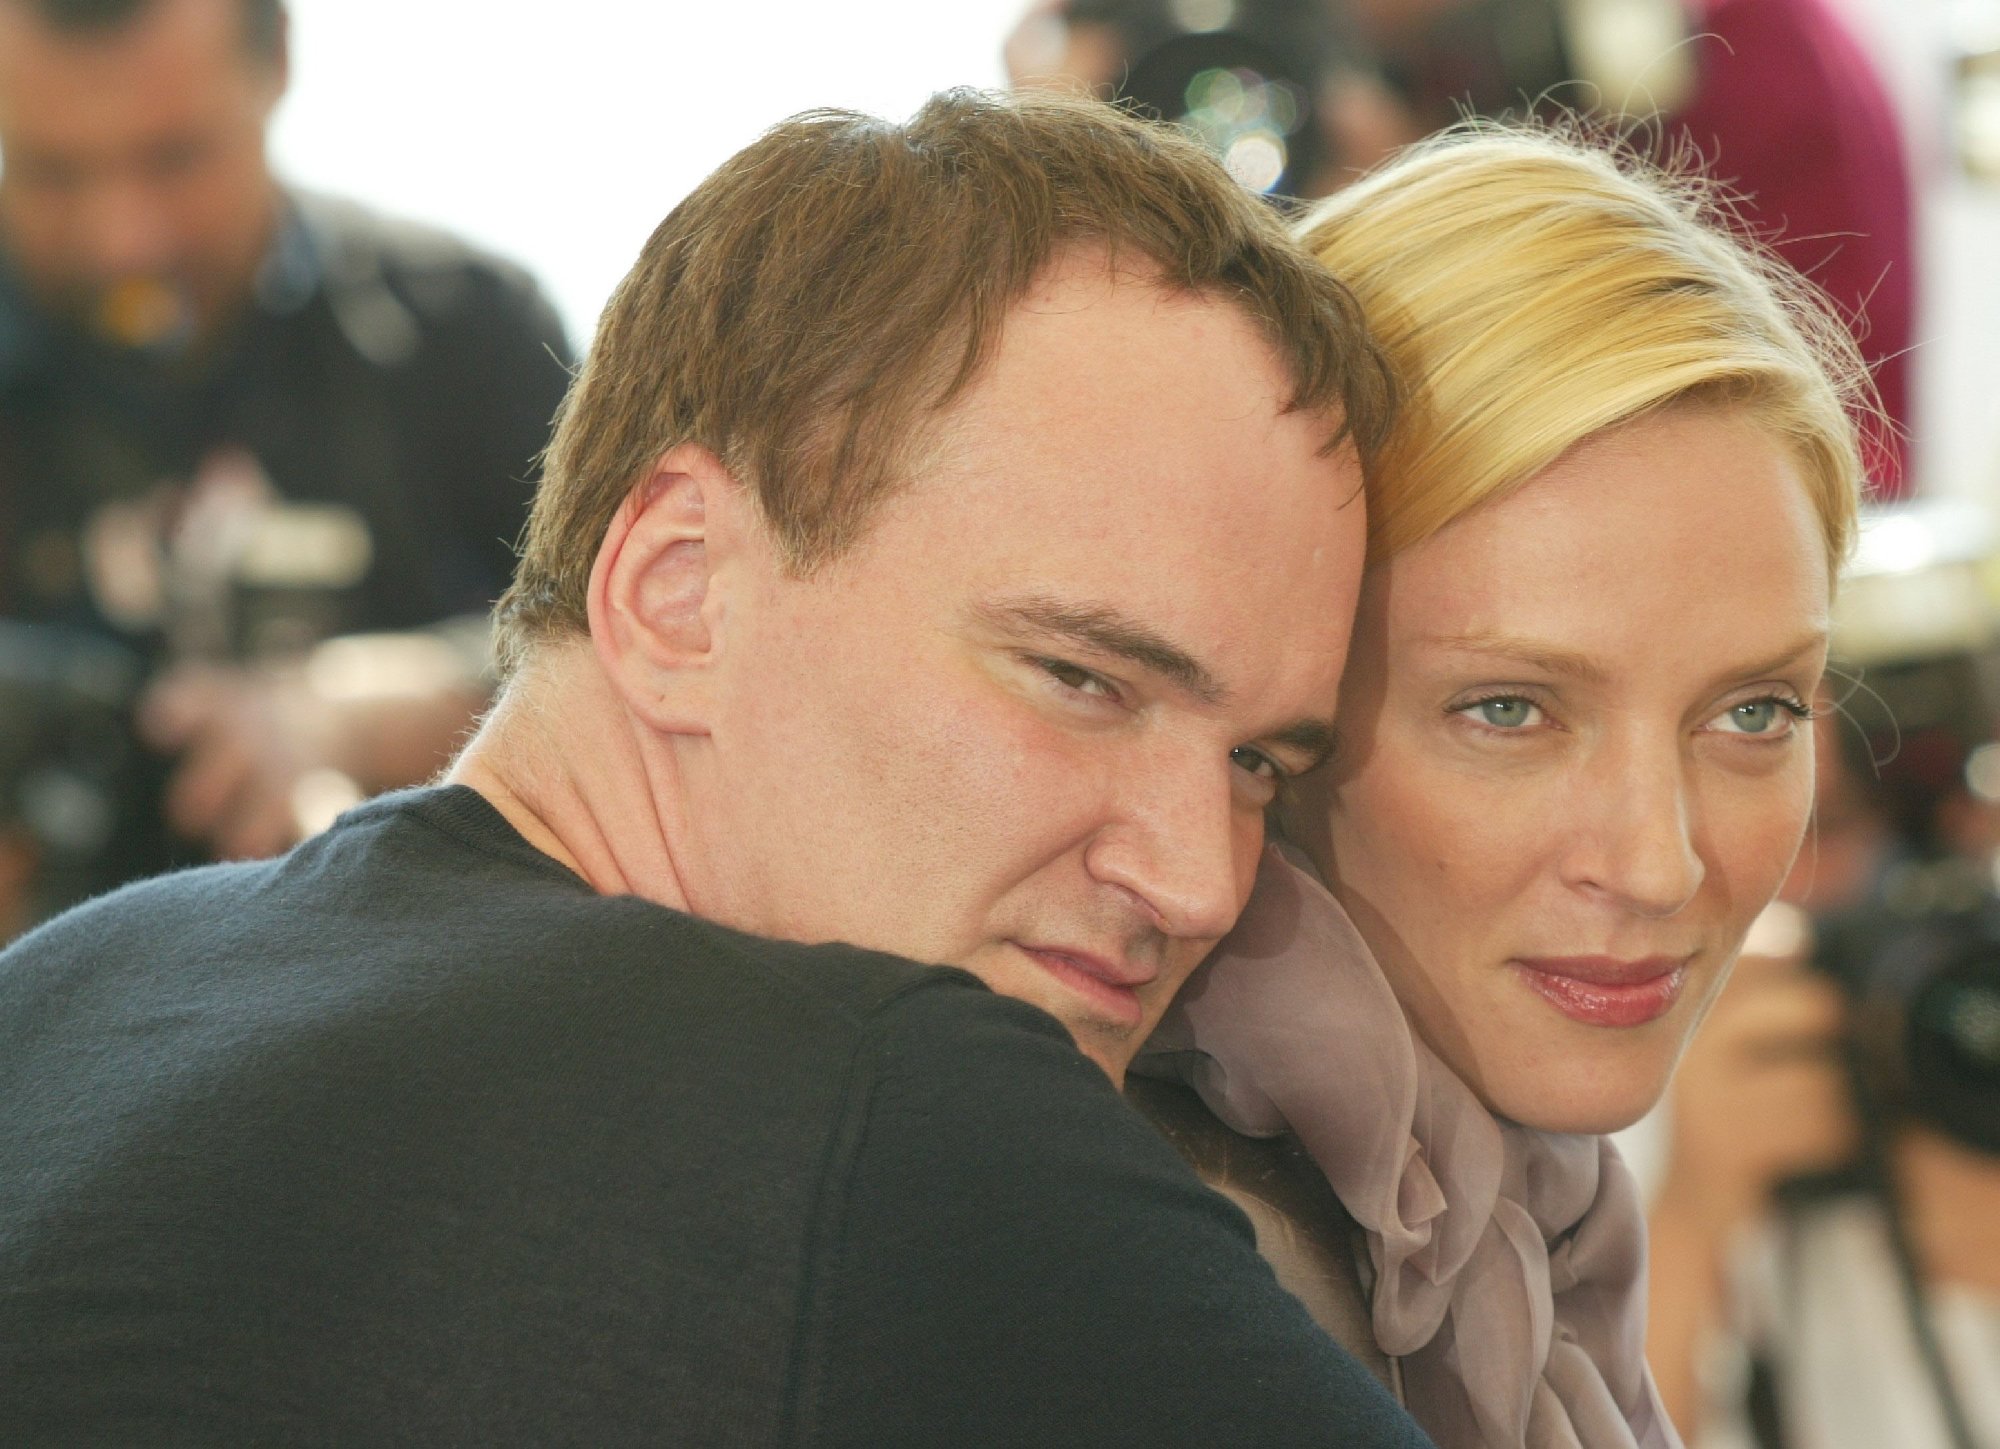 Quentin Tarantino Channeled His Femininity in ‘Kill Bill’ as Revenge Toward Real People